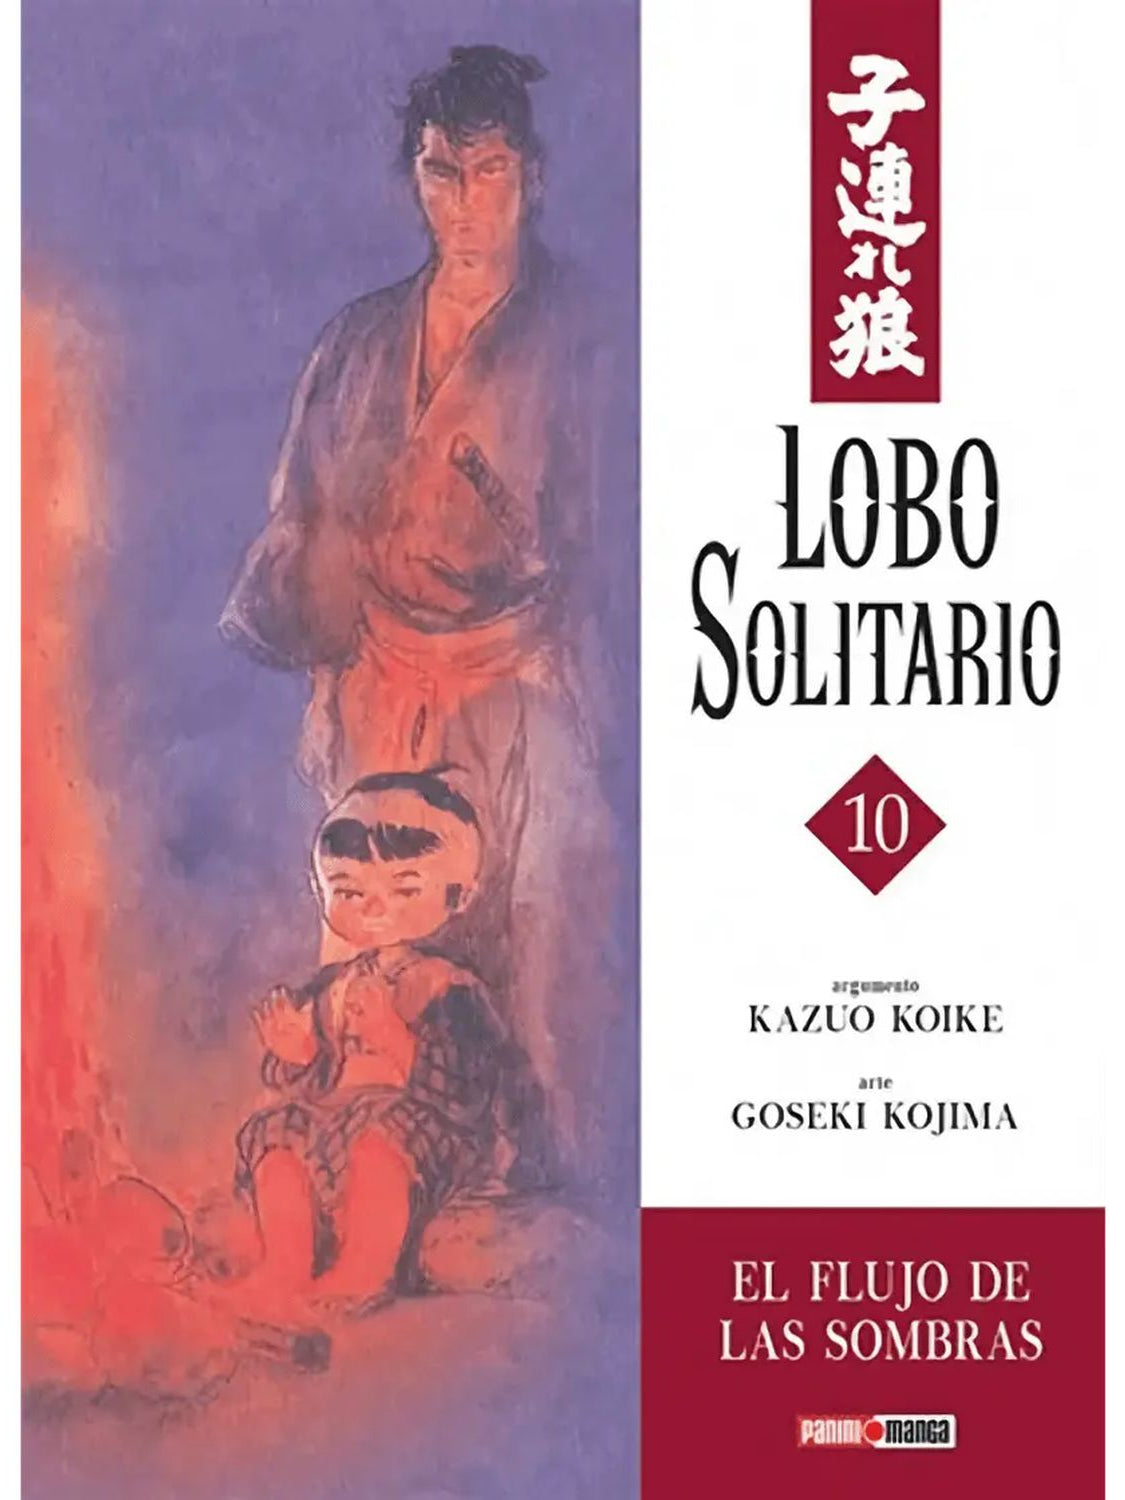 Lobo Solitario #10 El Flujo De Las Sombras Panini México ENcuadrocomics